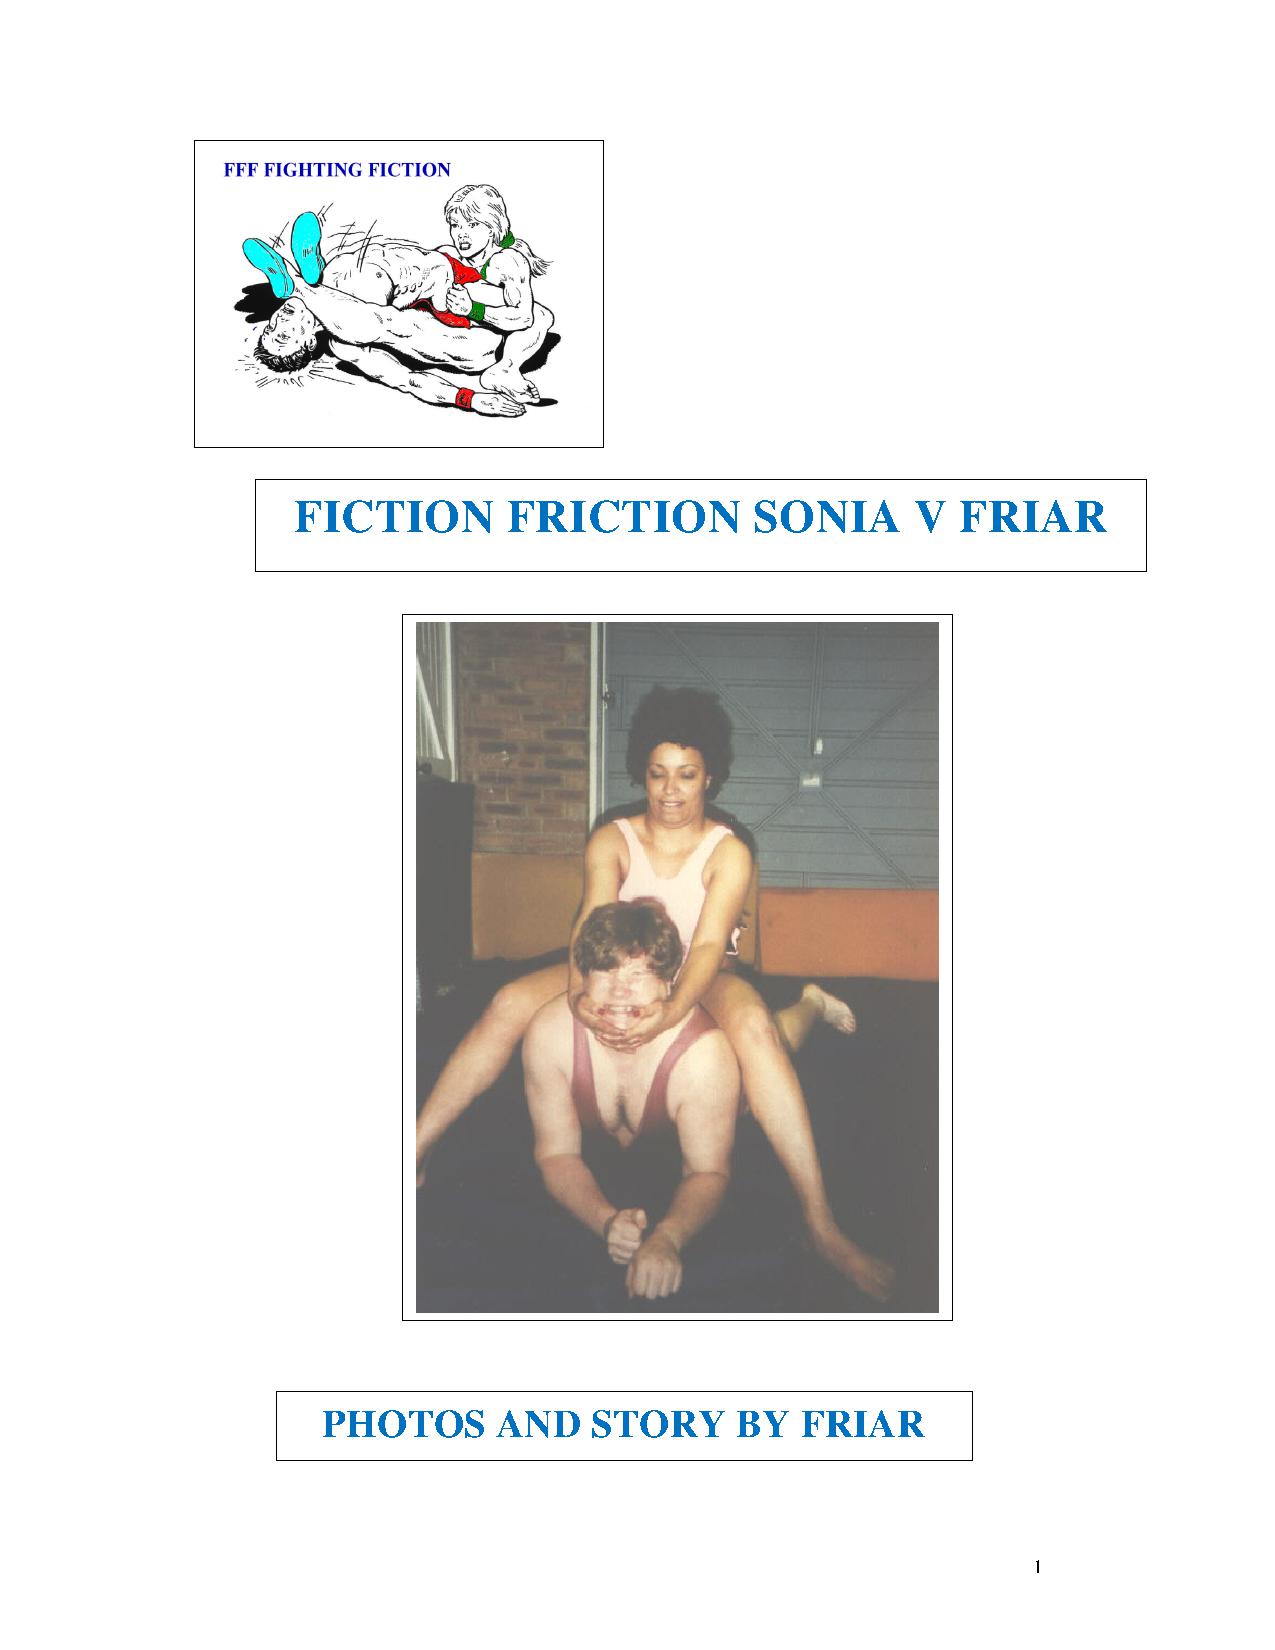 fiction_friction_cvr_1